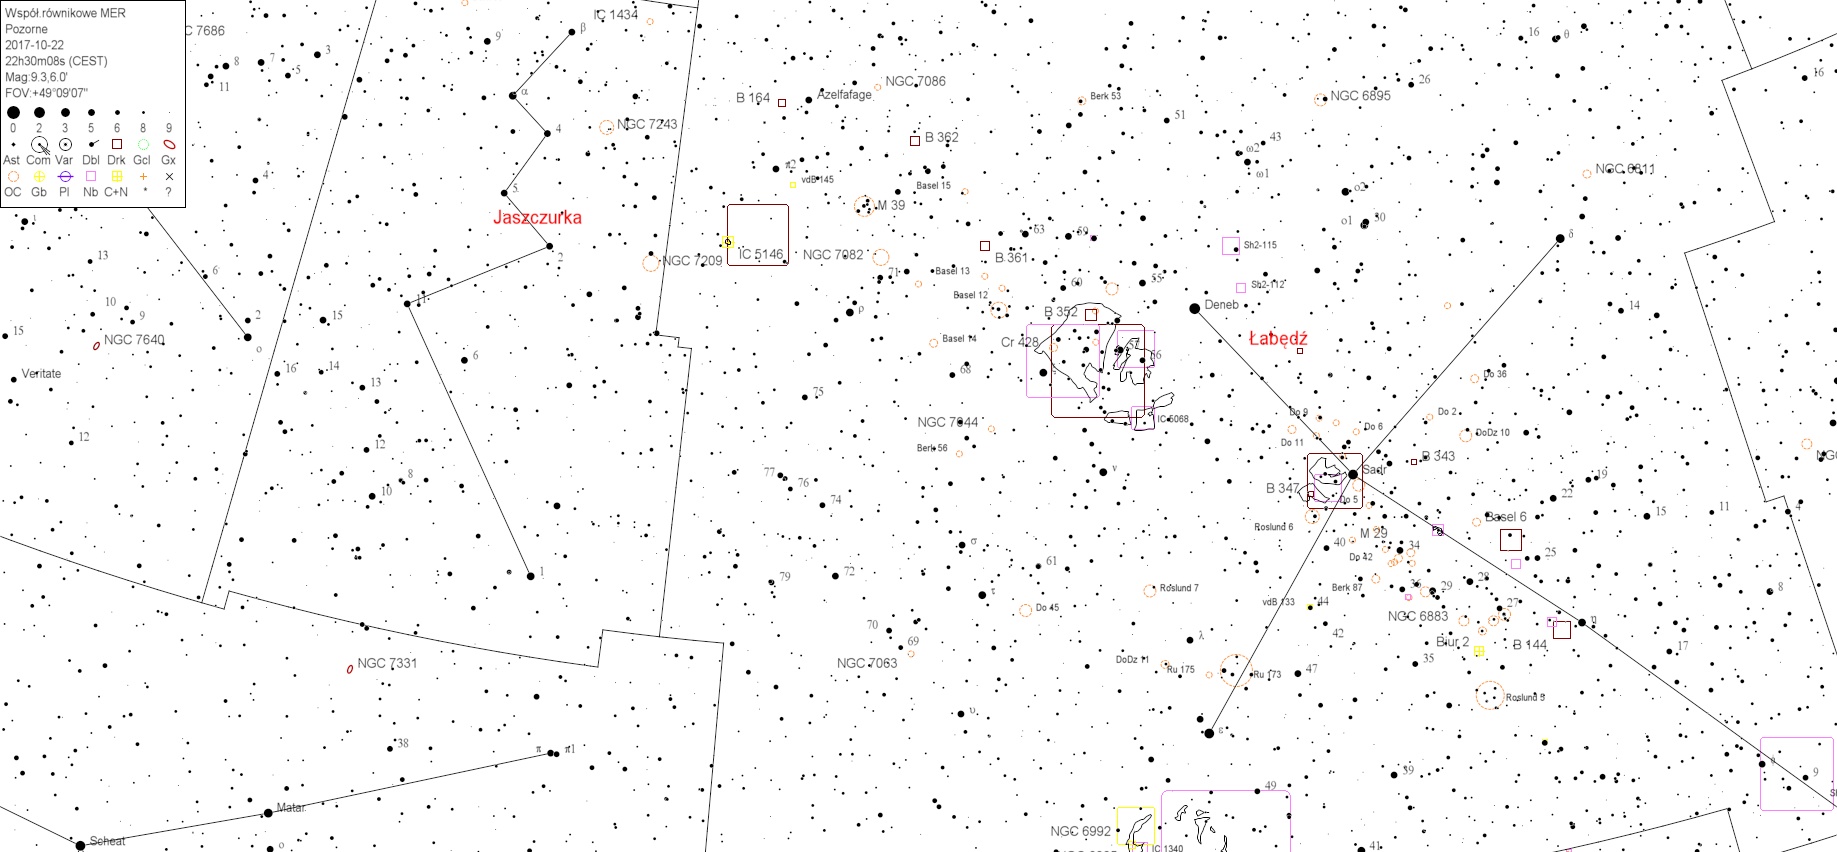 IC 5146.jpg